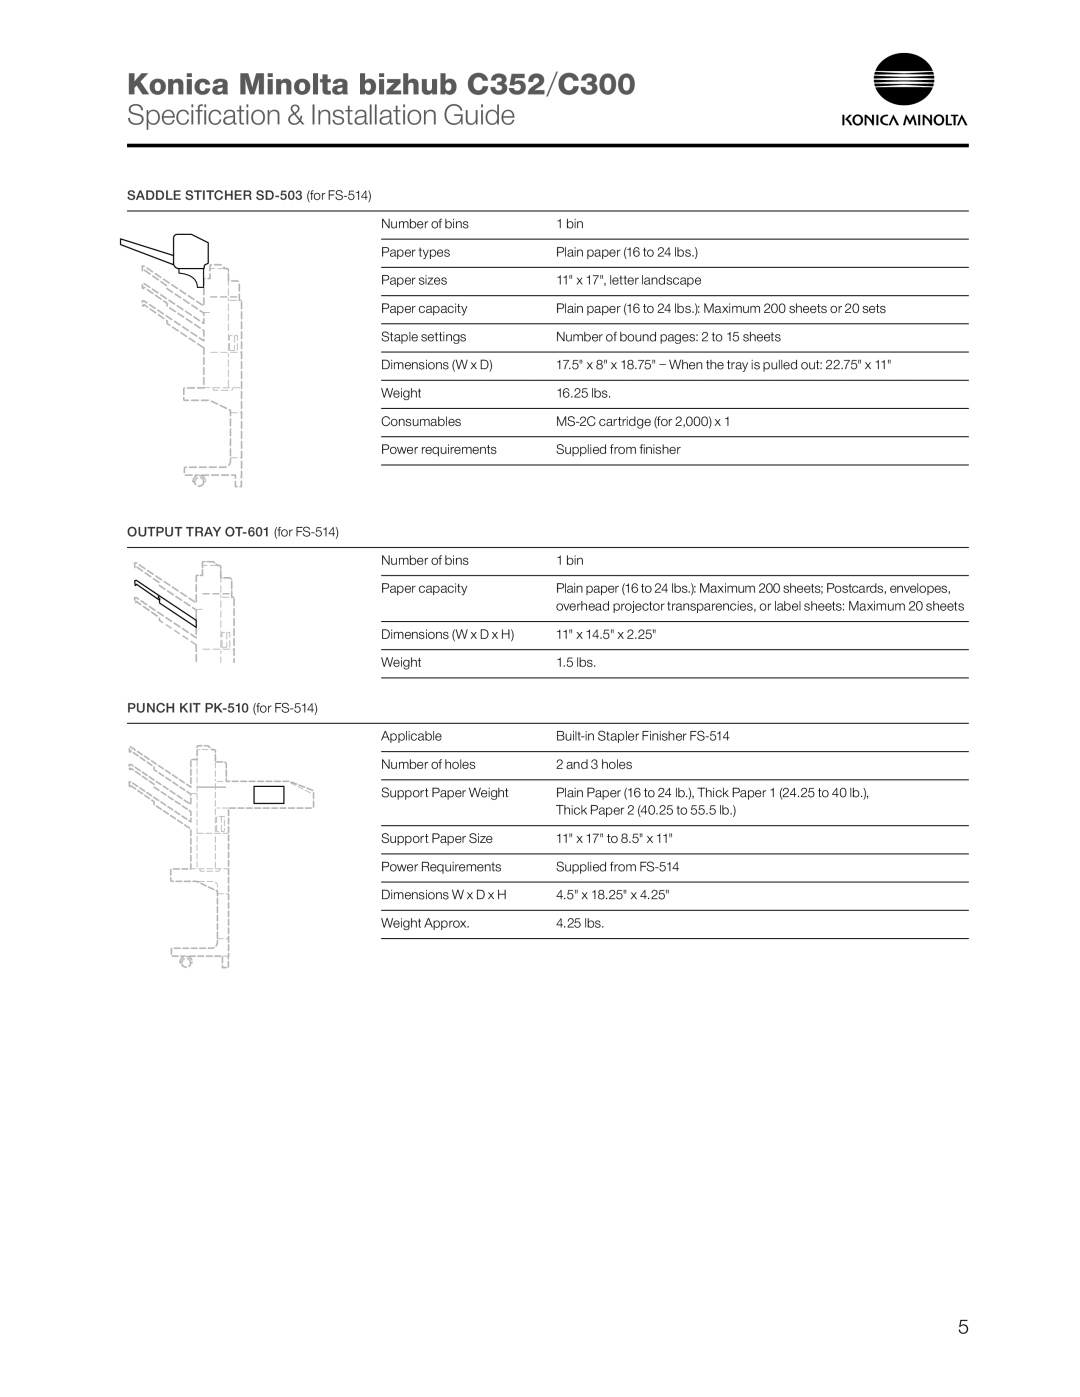 Konica Minolta Konica Minolta bizhub C352 C300, Specification & Installation Guide, Saddle Stitcher SD-503 for FS-514 